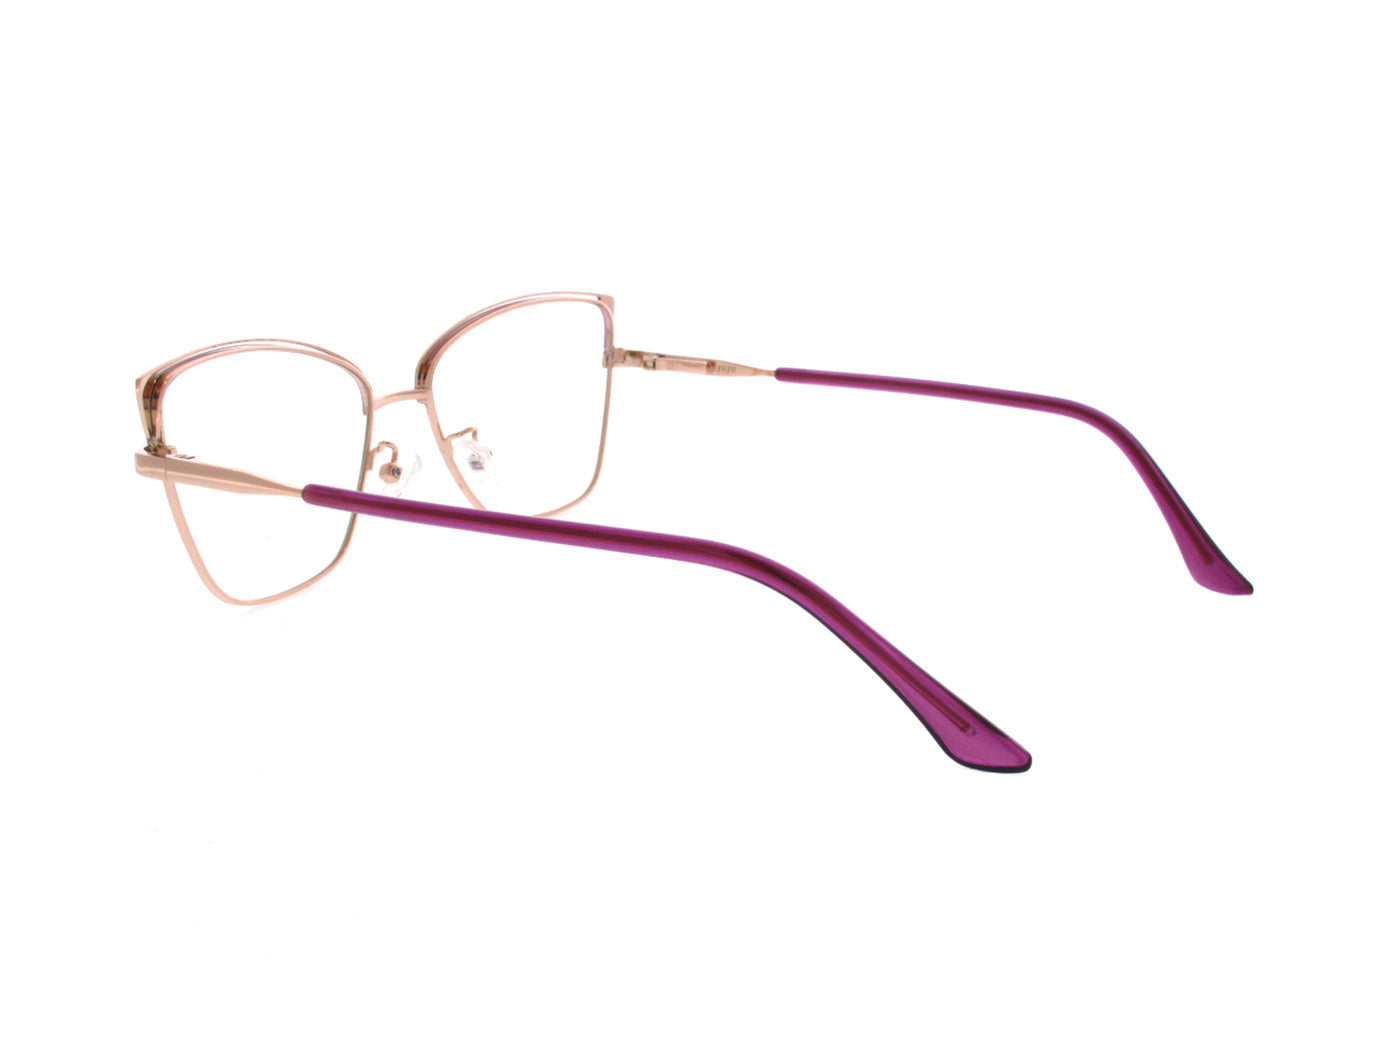 Cateye Glasses 750582